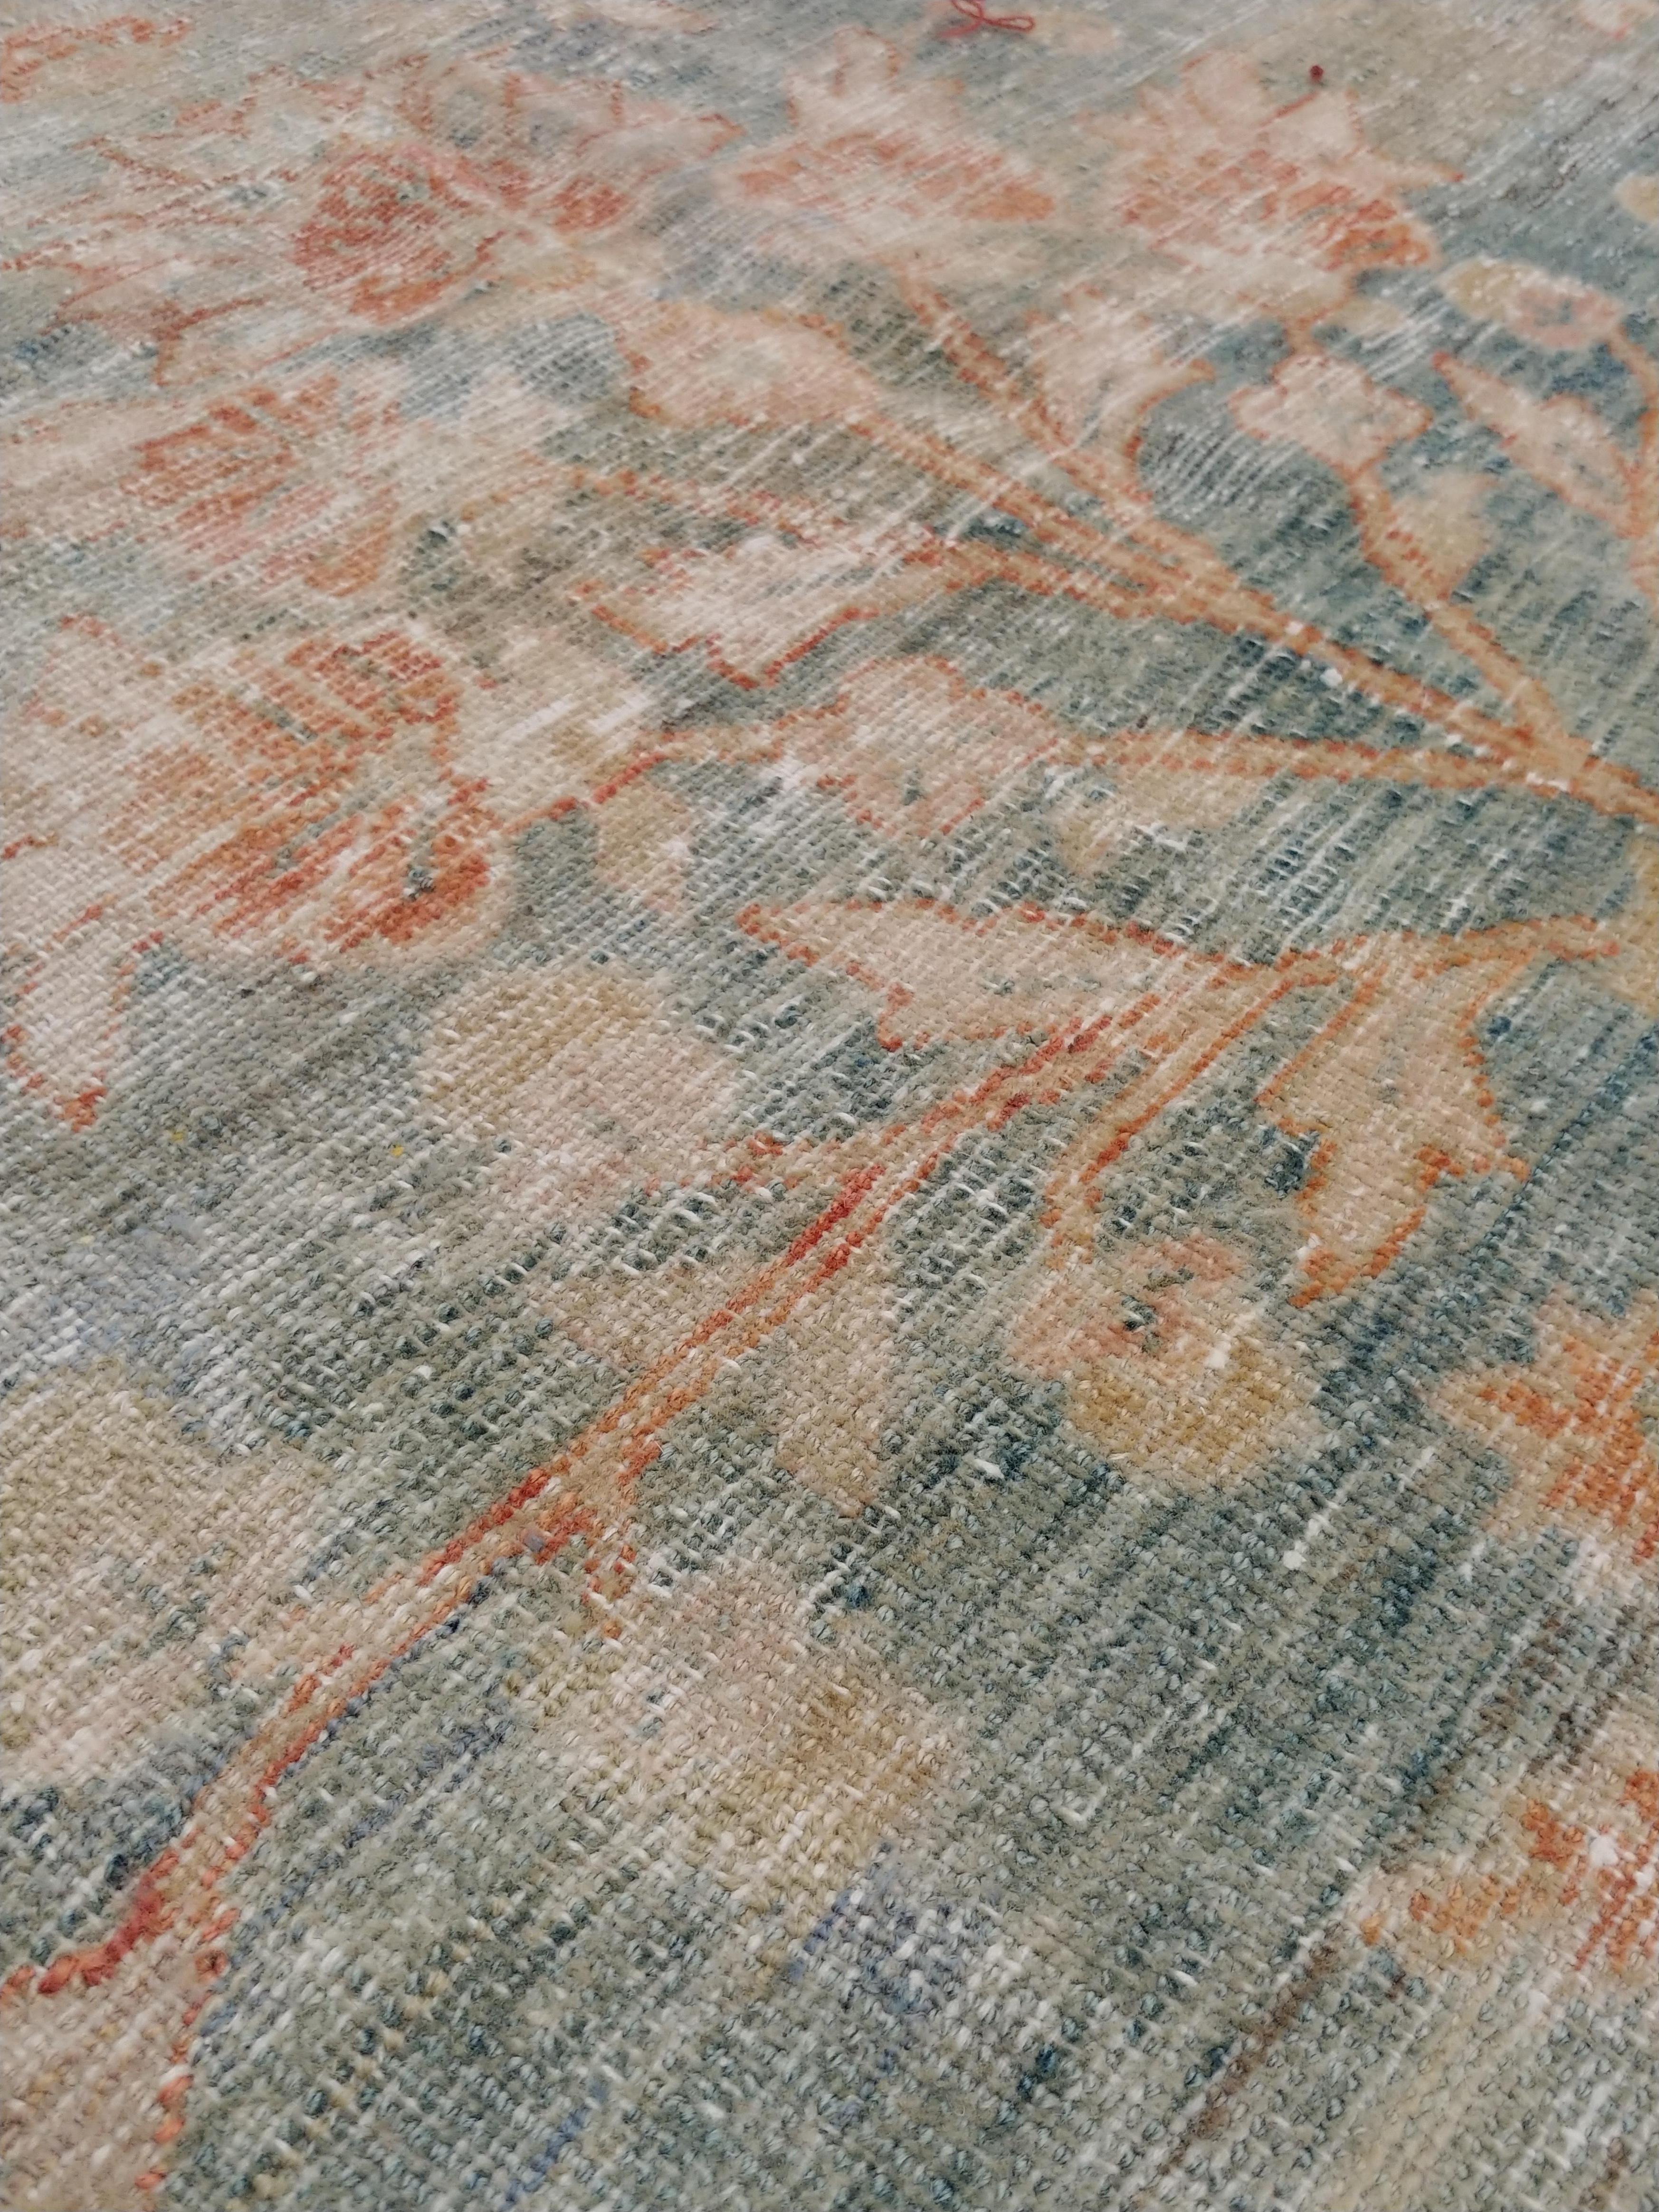 20th Century Antique Sultanabad Carpet, Handmade Oriental Rug, Soft, Pale Blue, Orange